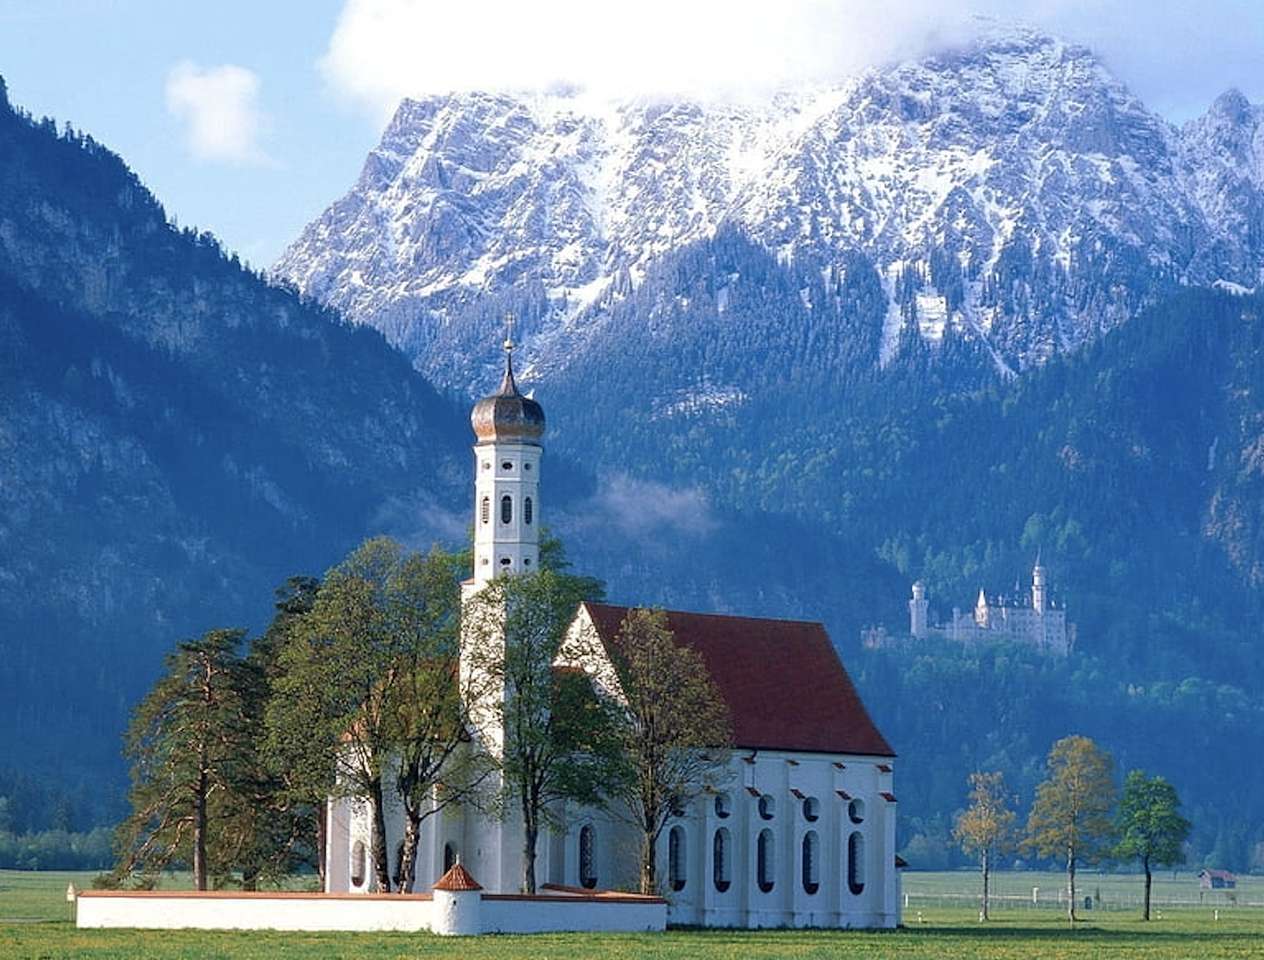 Germany-Schwangau charming church with a wonderful interior online puzzle